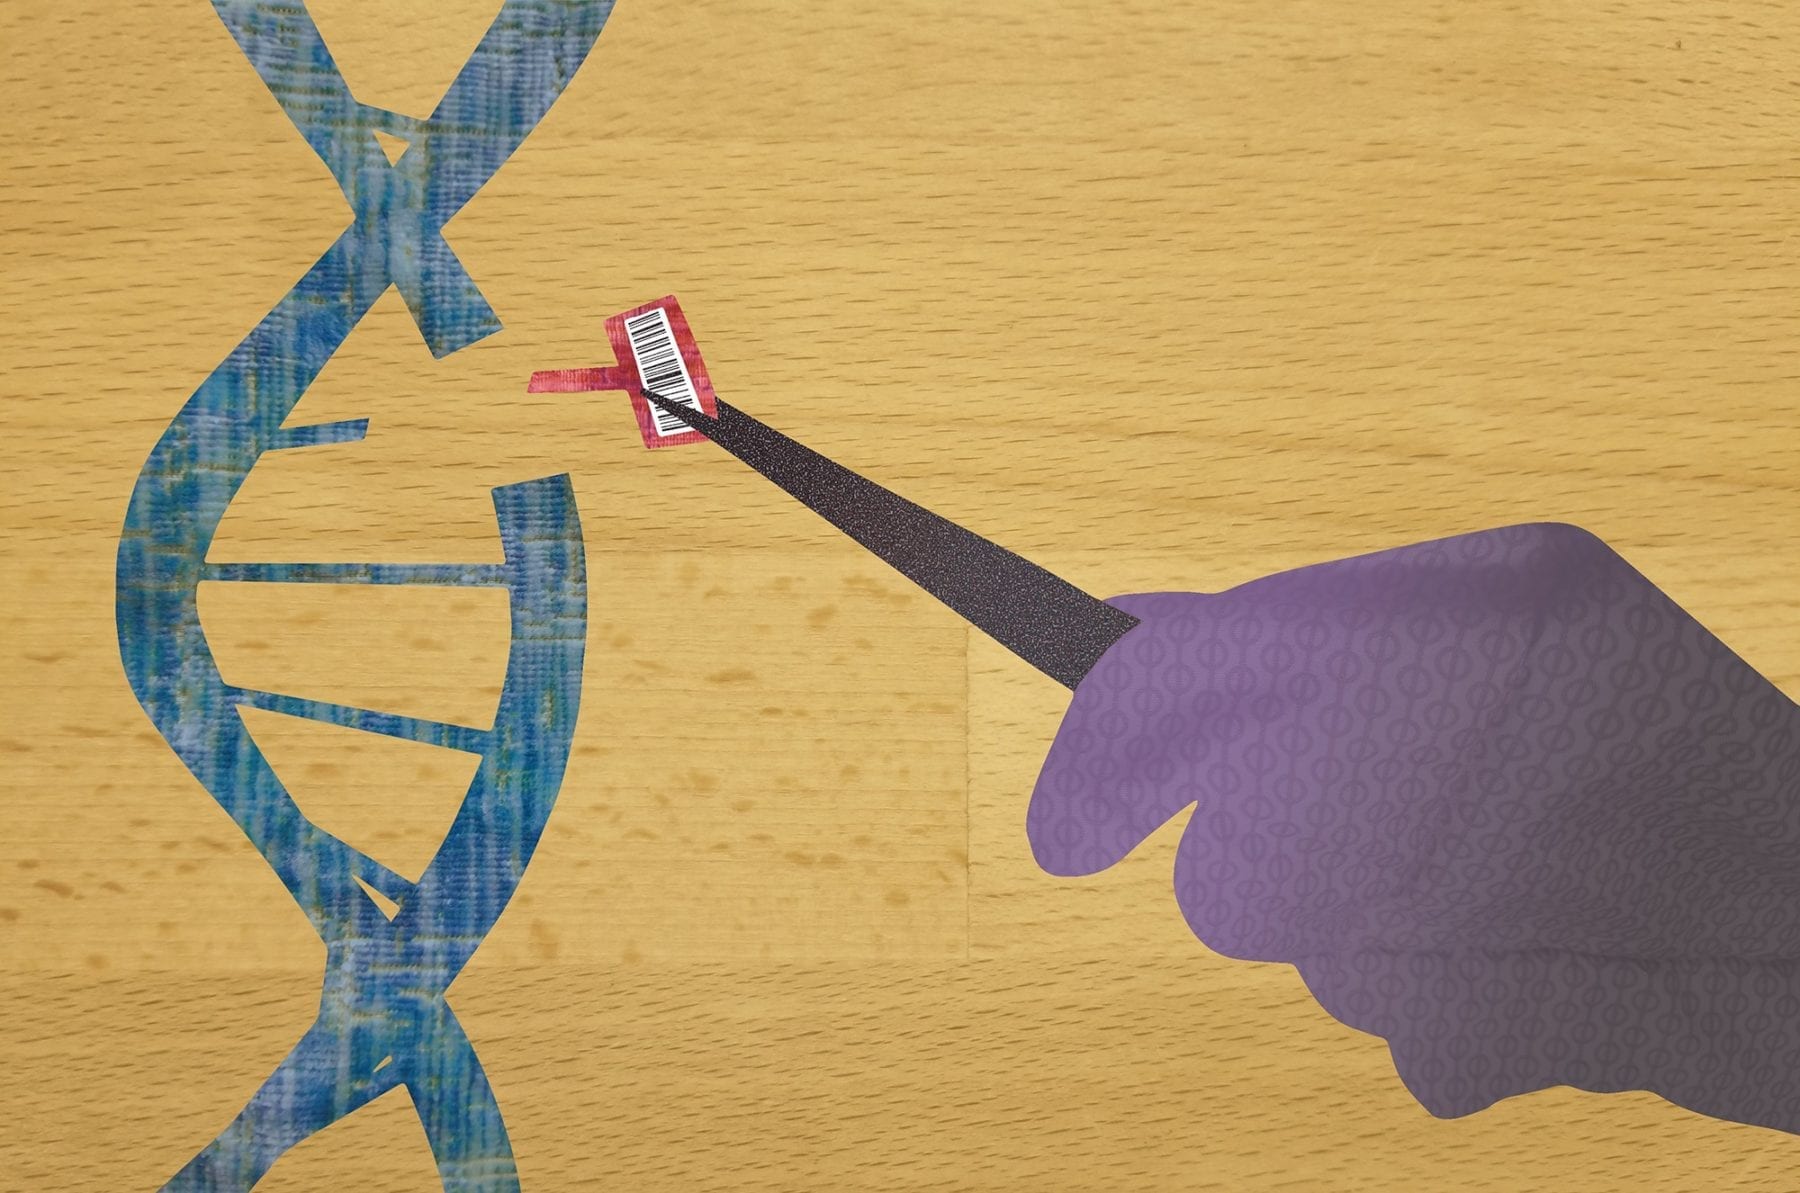 Transforming the CRISPR gene editor into a highly precision tool